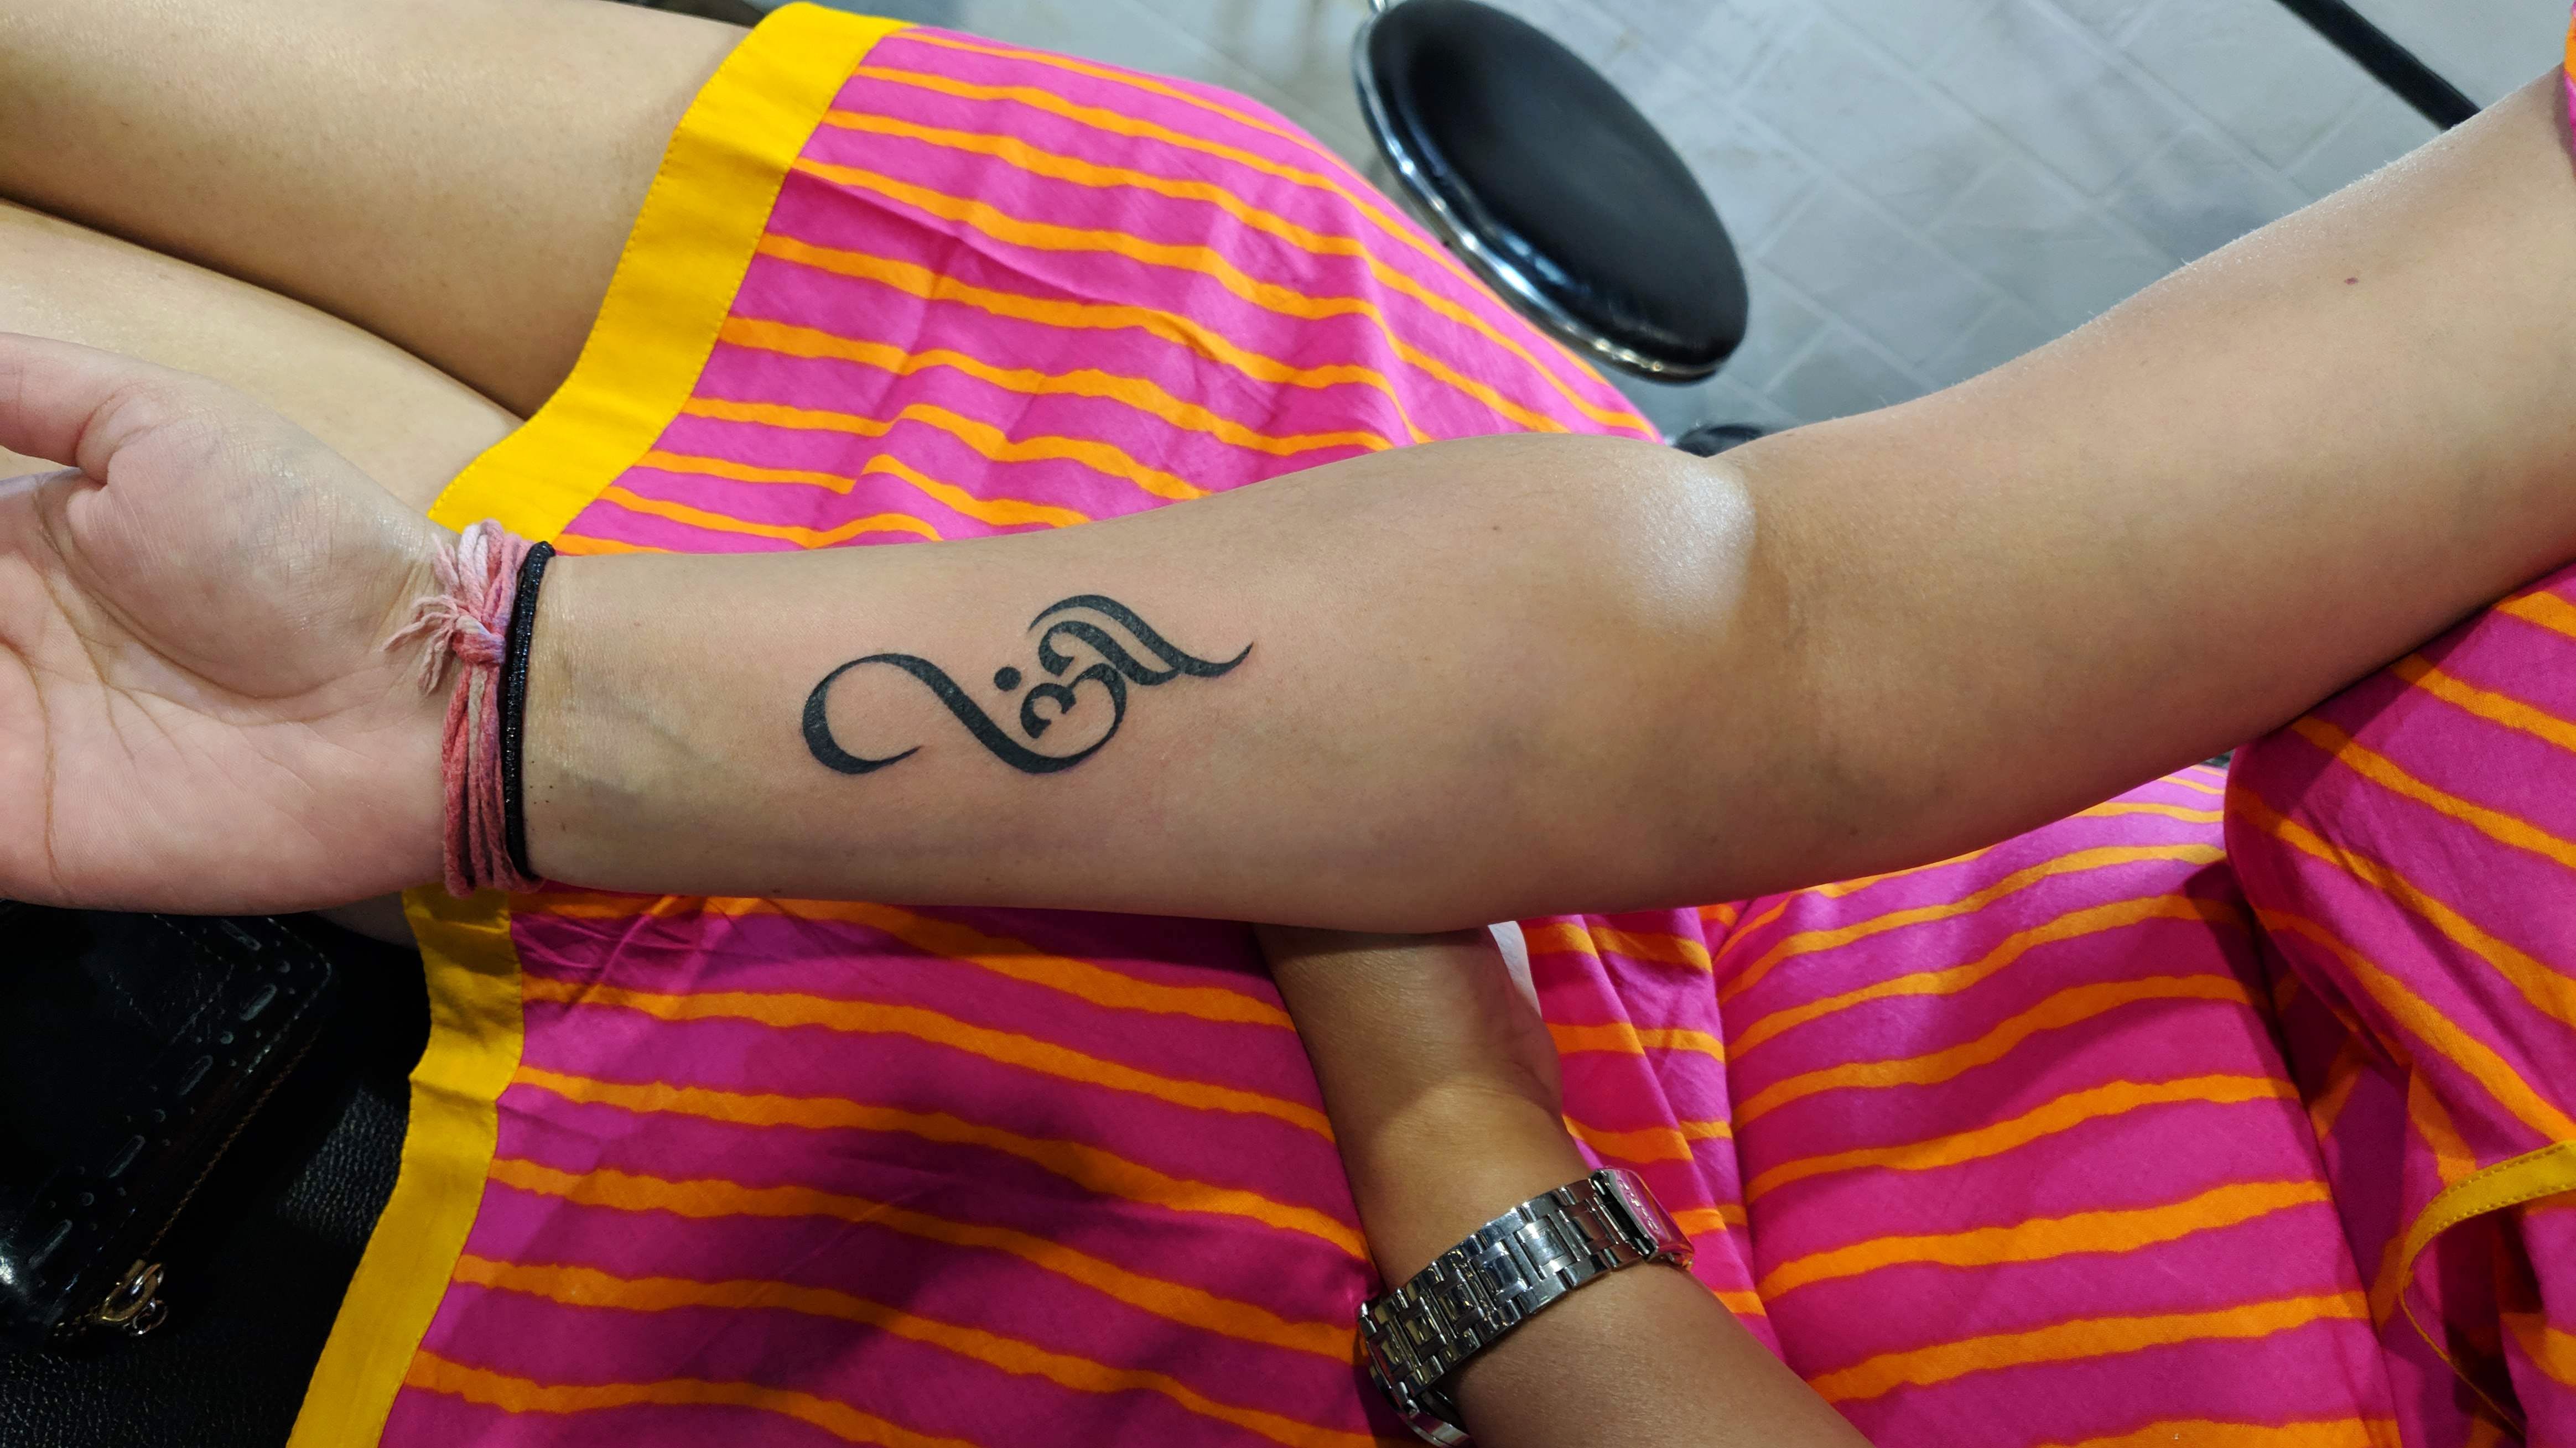 Kailash Tattoos - Kailash Tattoos is in Palghar, India. | Facebook